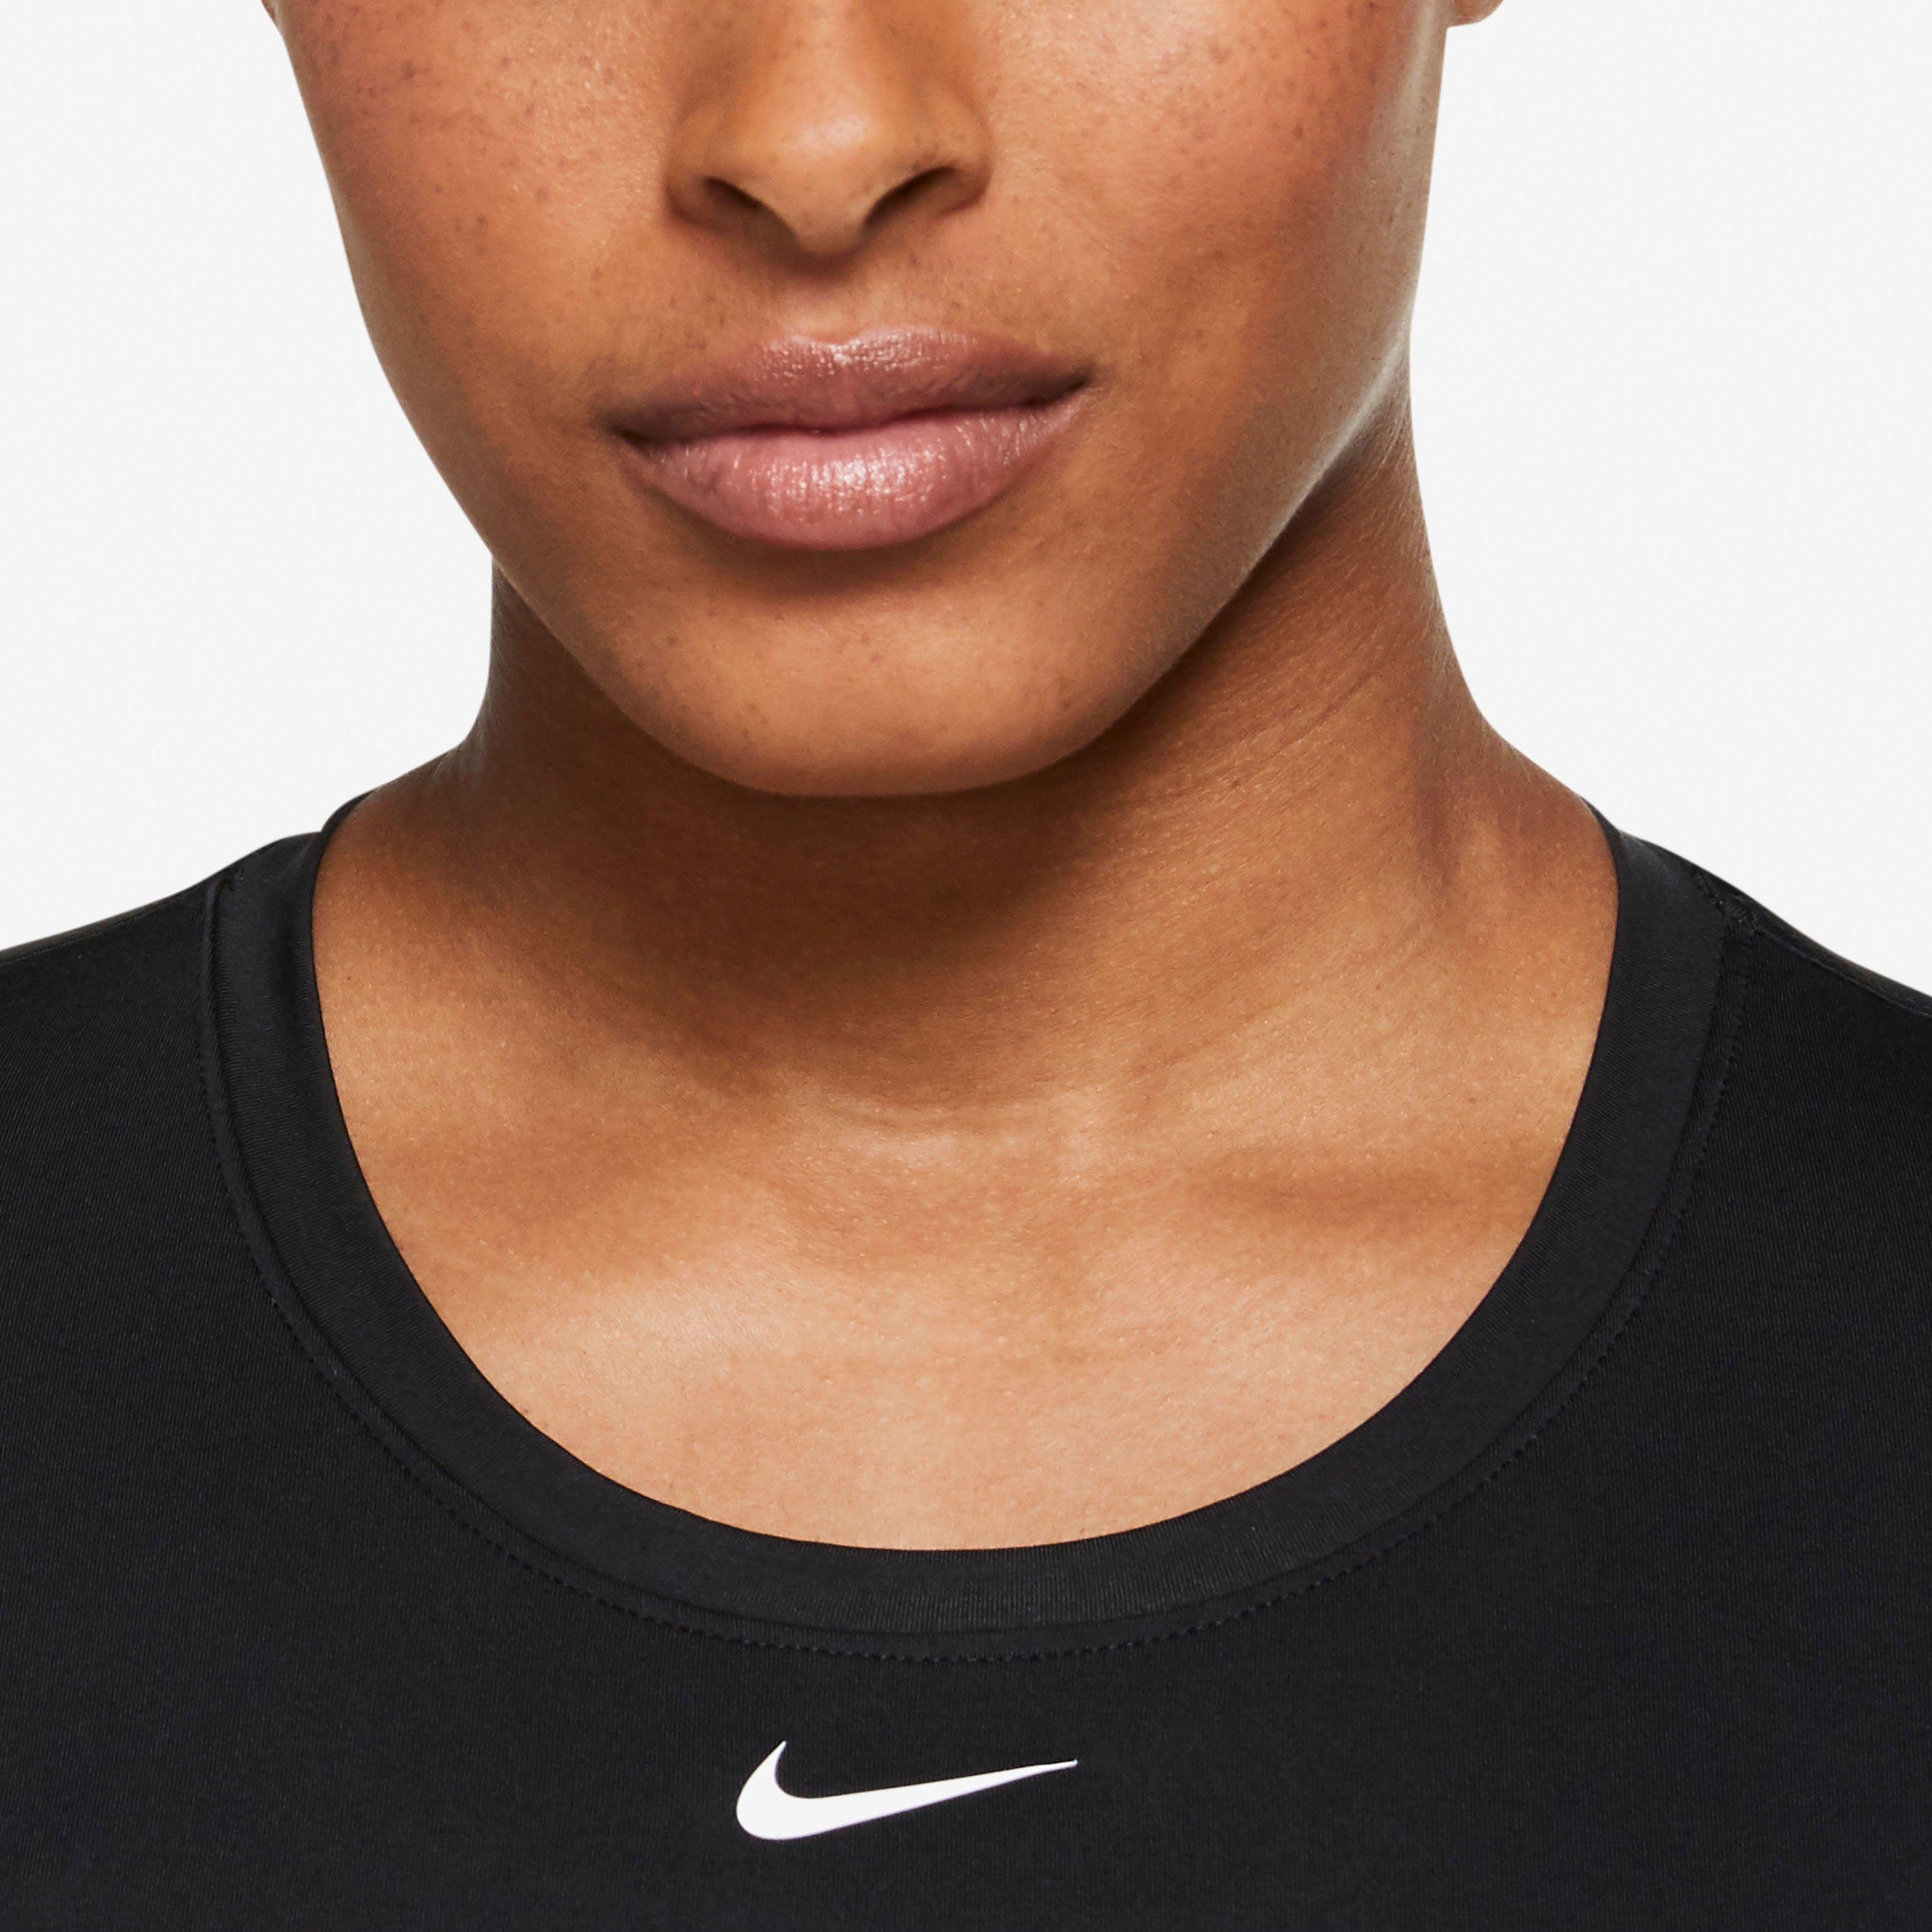 WOMEN'S Nike Trainingsshirt DRI-FIT schwarz SLIM TOP FIT SHORT-SLEEVE ONE